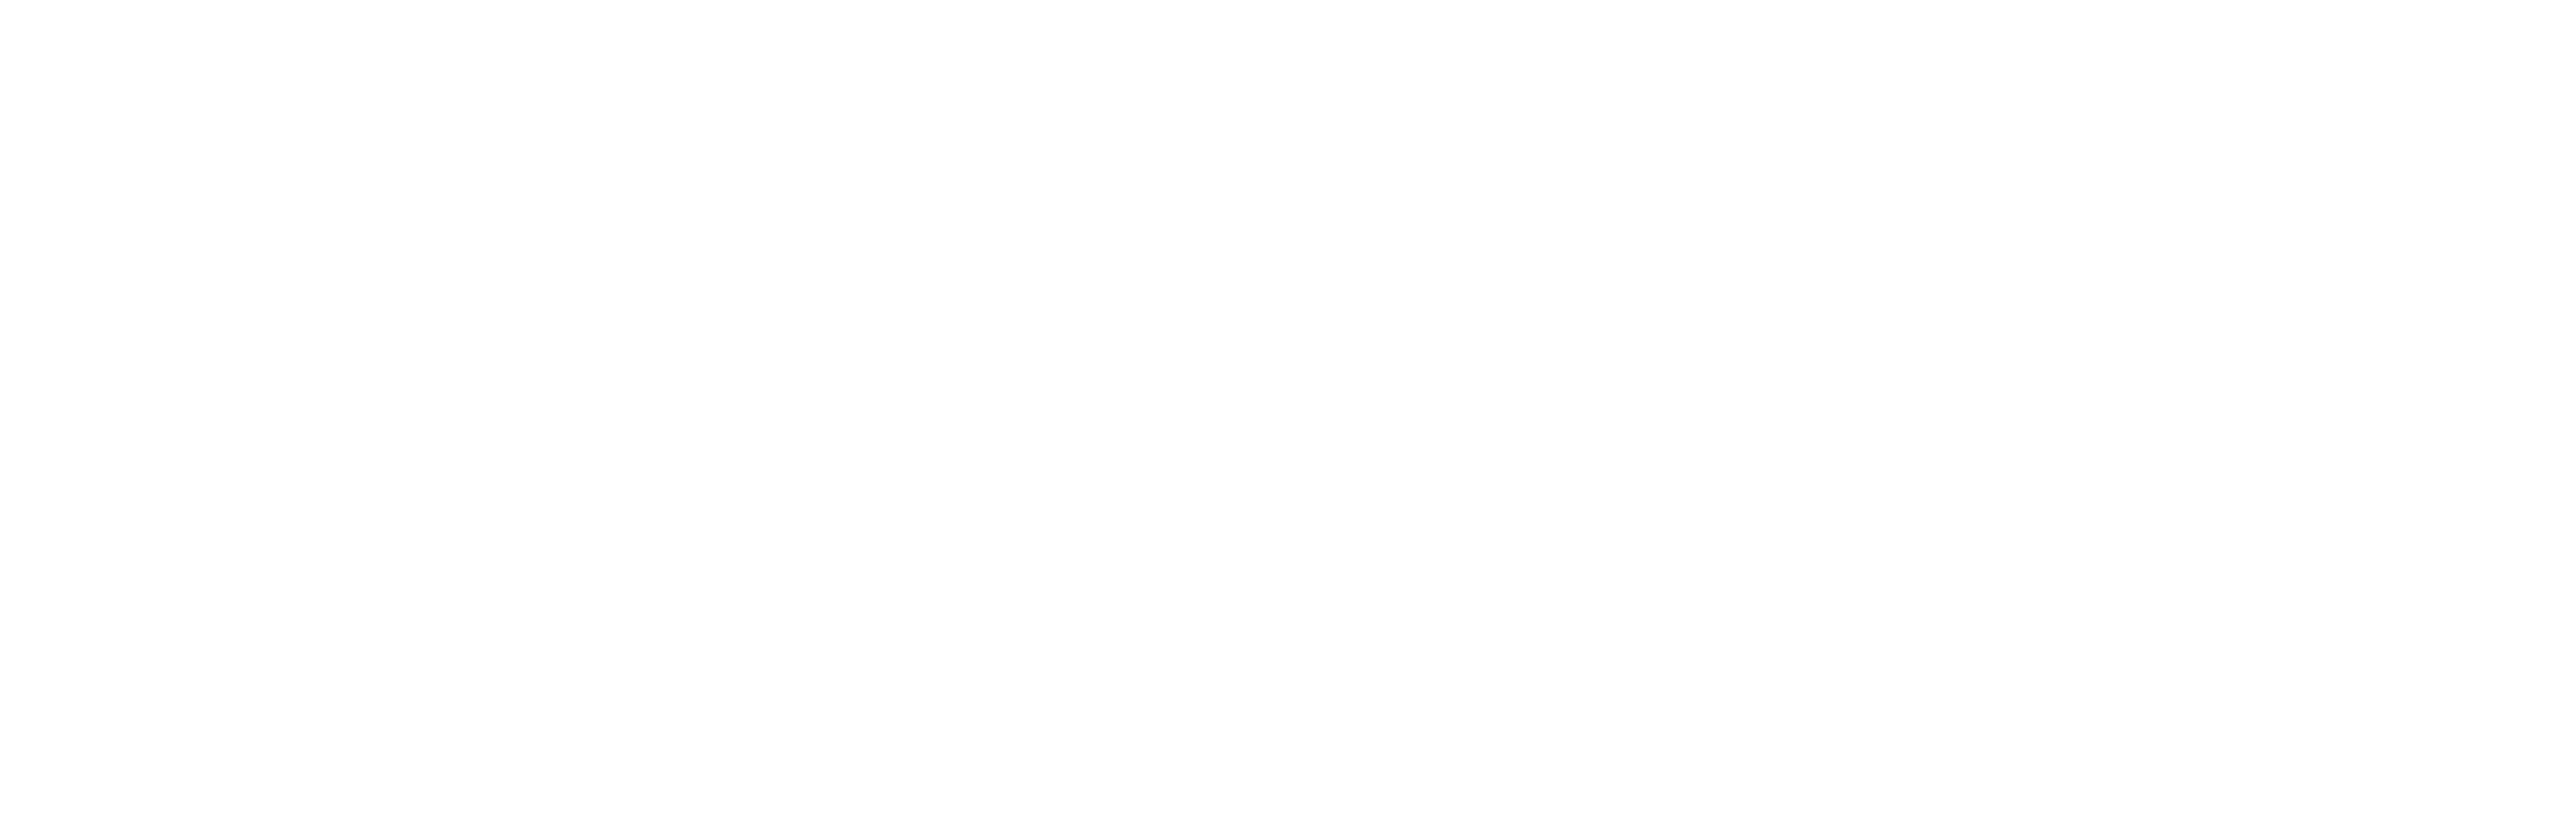 AniCura Vetamic Centre Veterinari logo